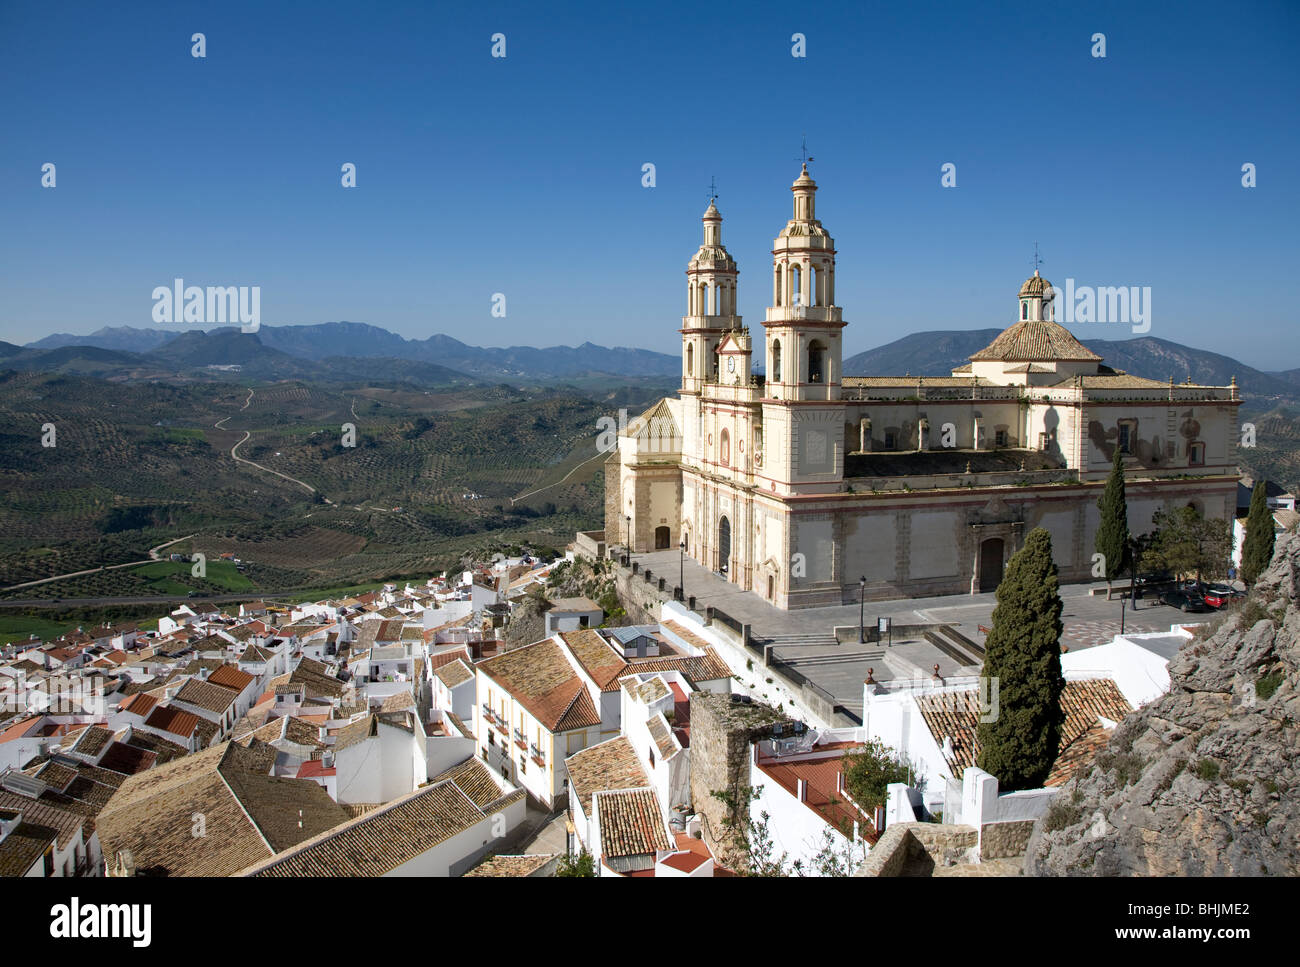 Olvera Church and surrounding countryside, Olvera, Cadiz, Spain Stock Photo